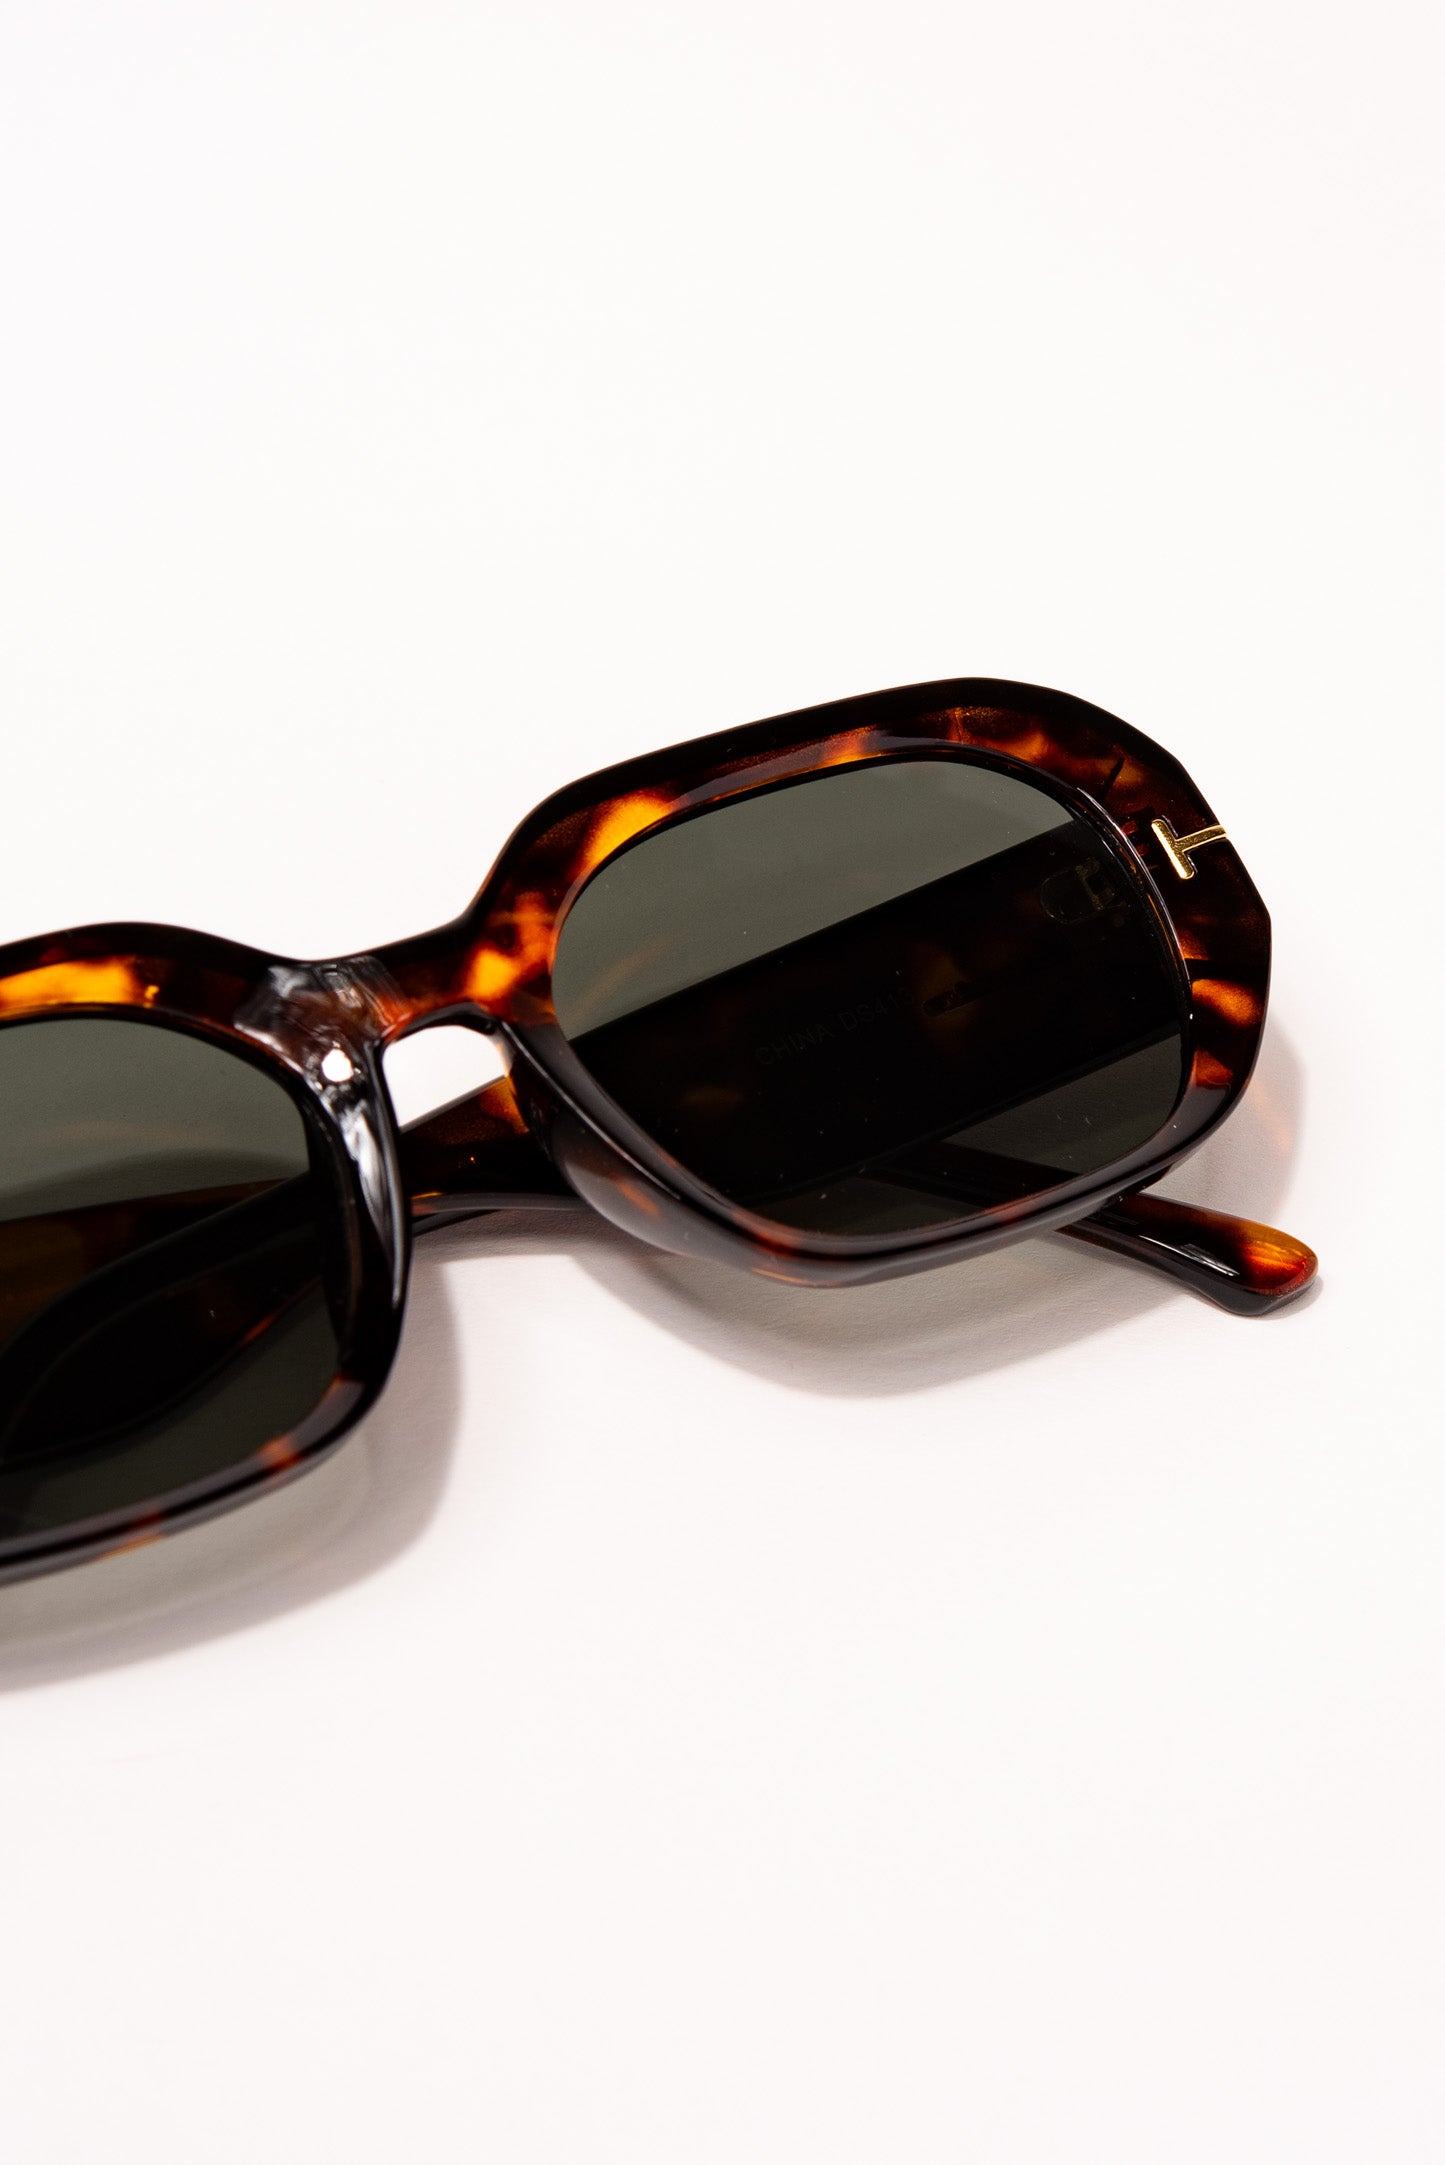 Genevie Oval Sunglasses - Leopard Tinted Lenses